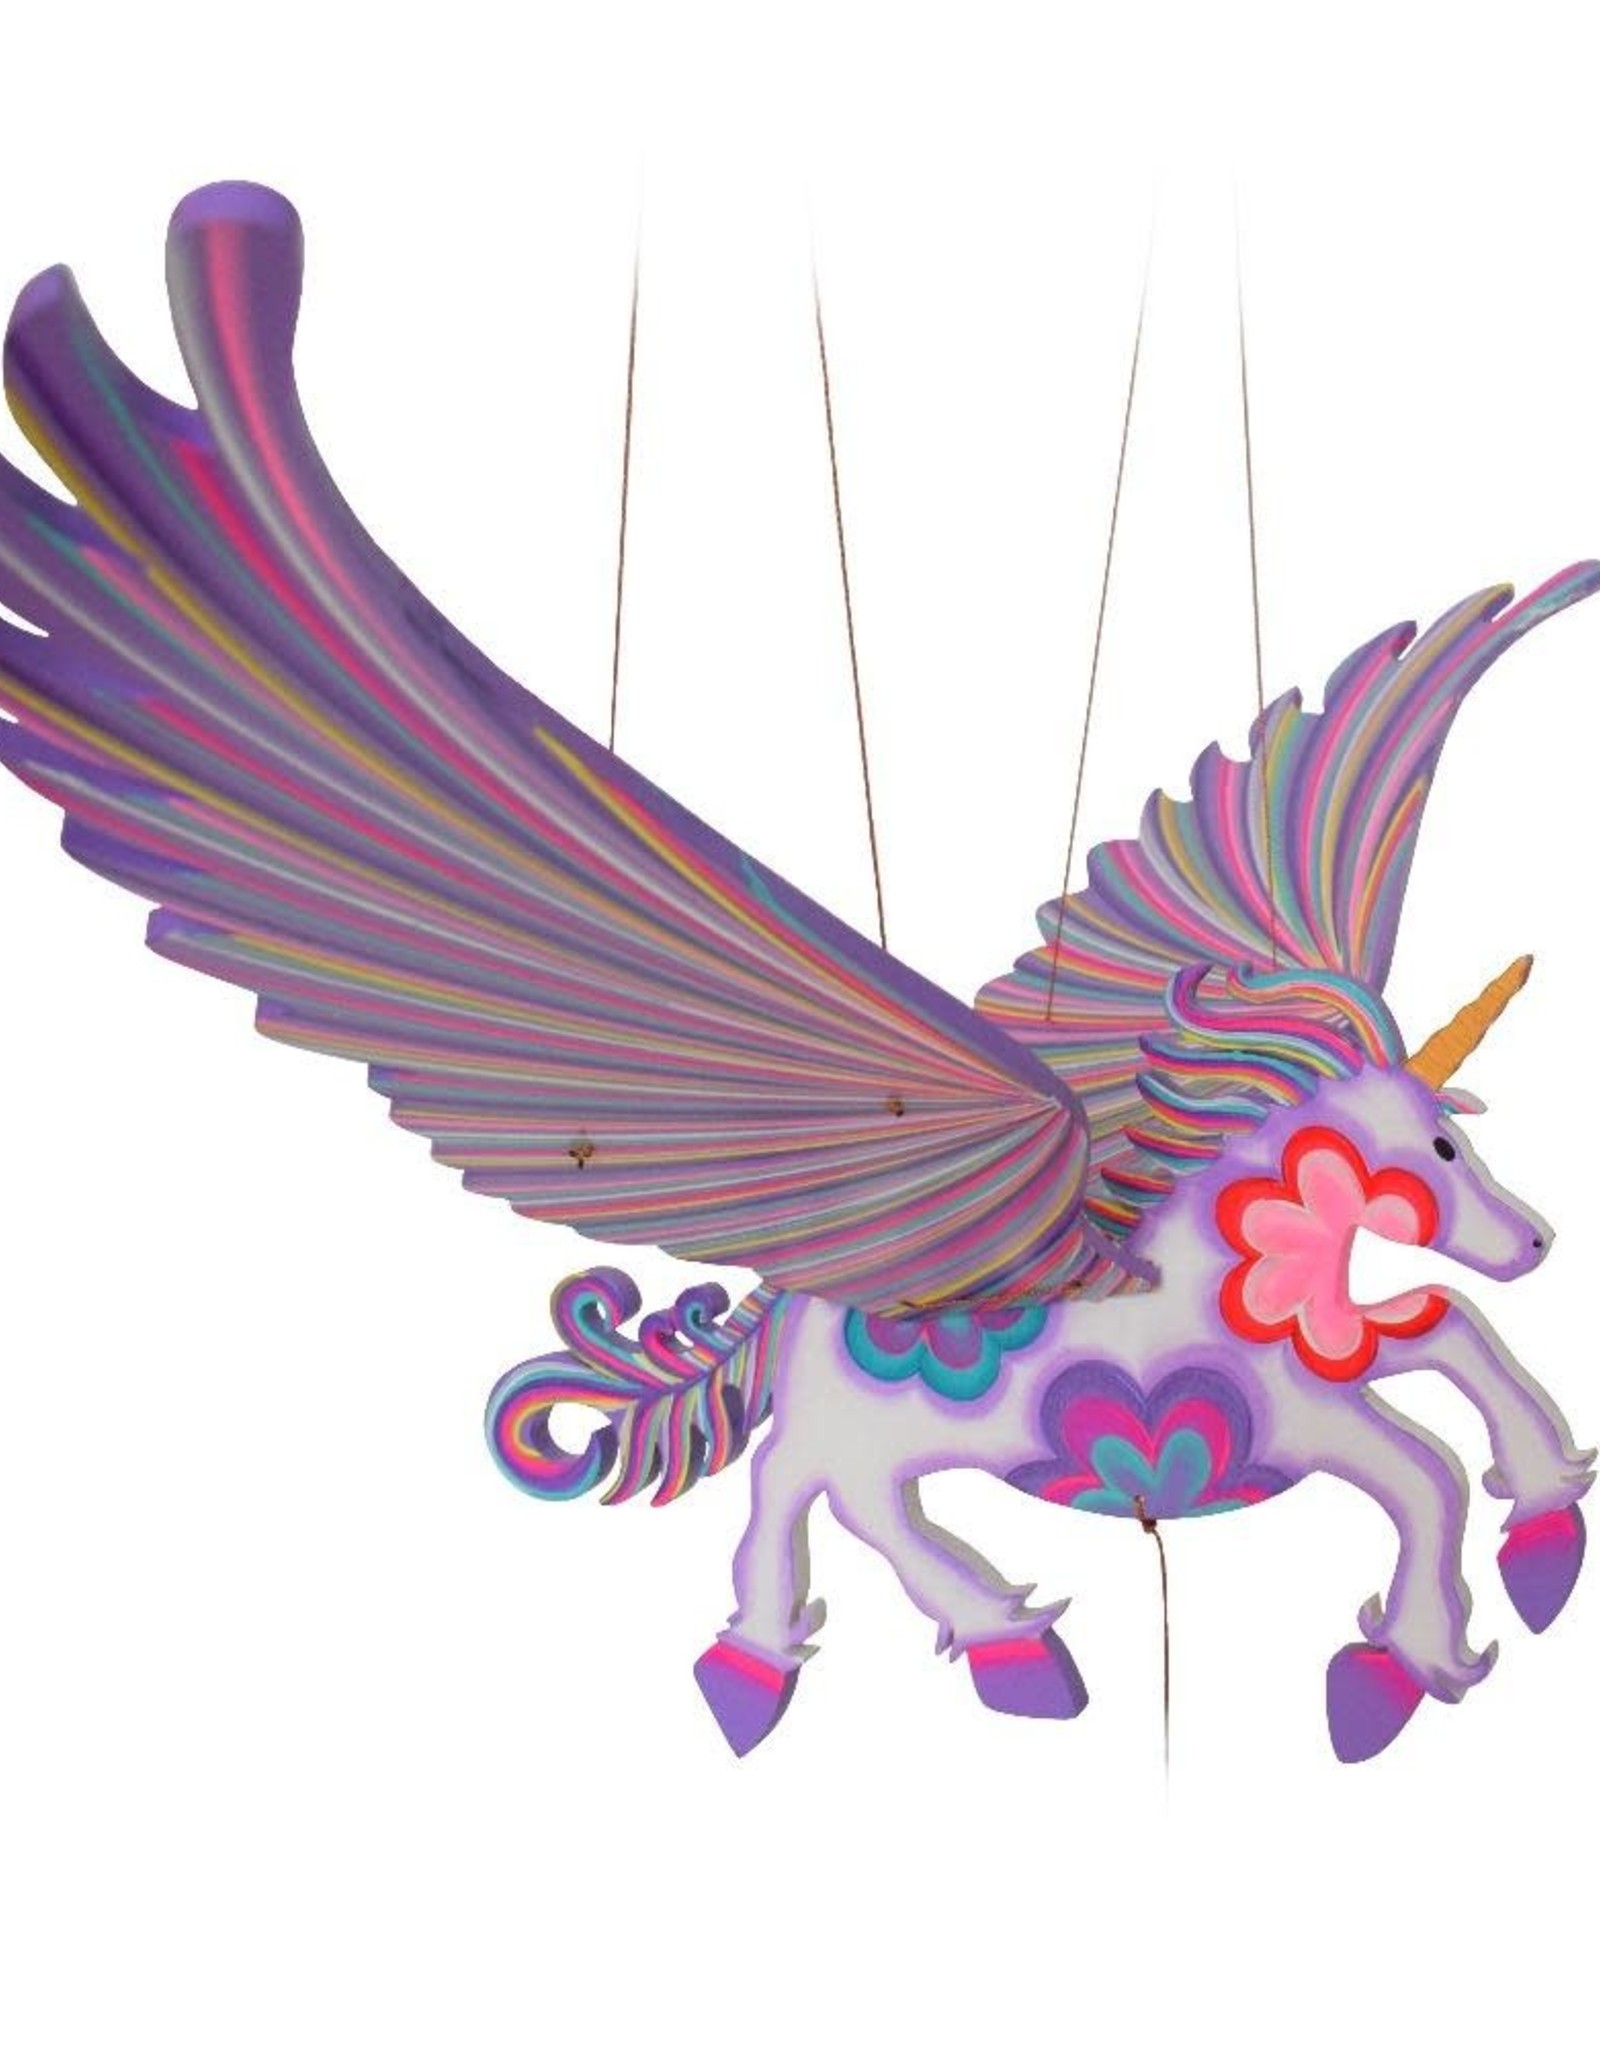 Tulia Artisans Unicorn Alicorn Flying Mobile - Large 32in wingspan